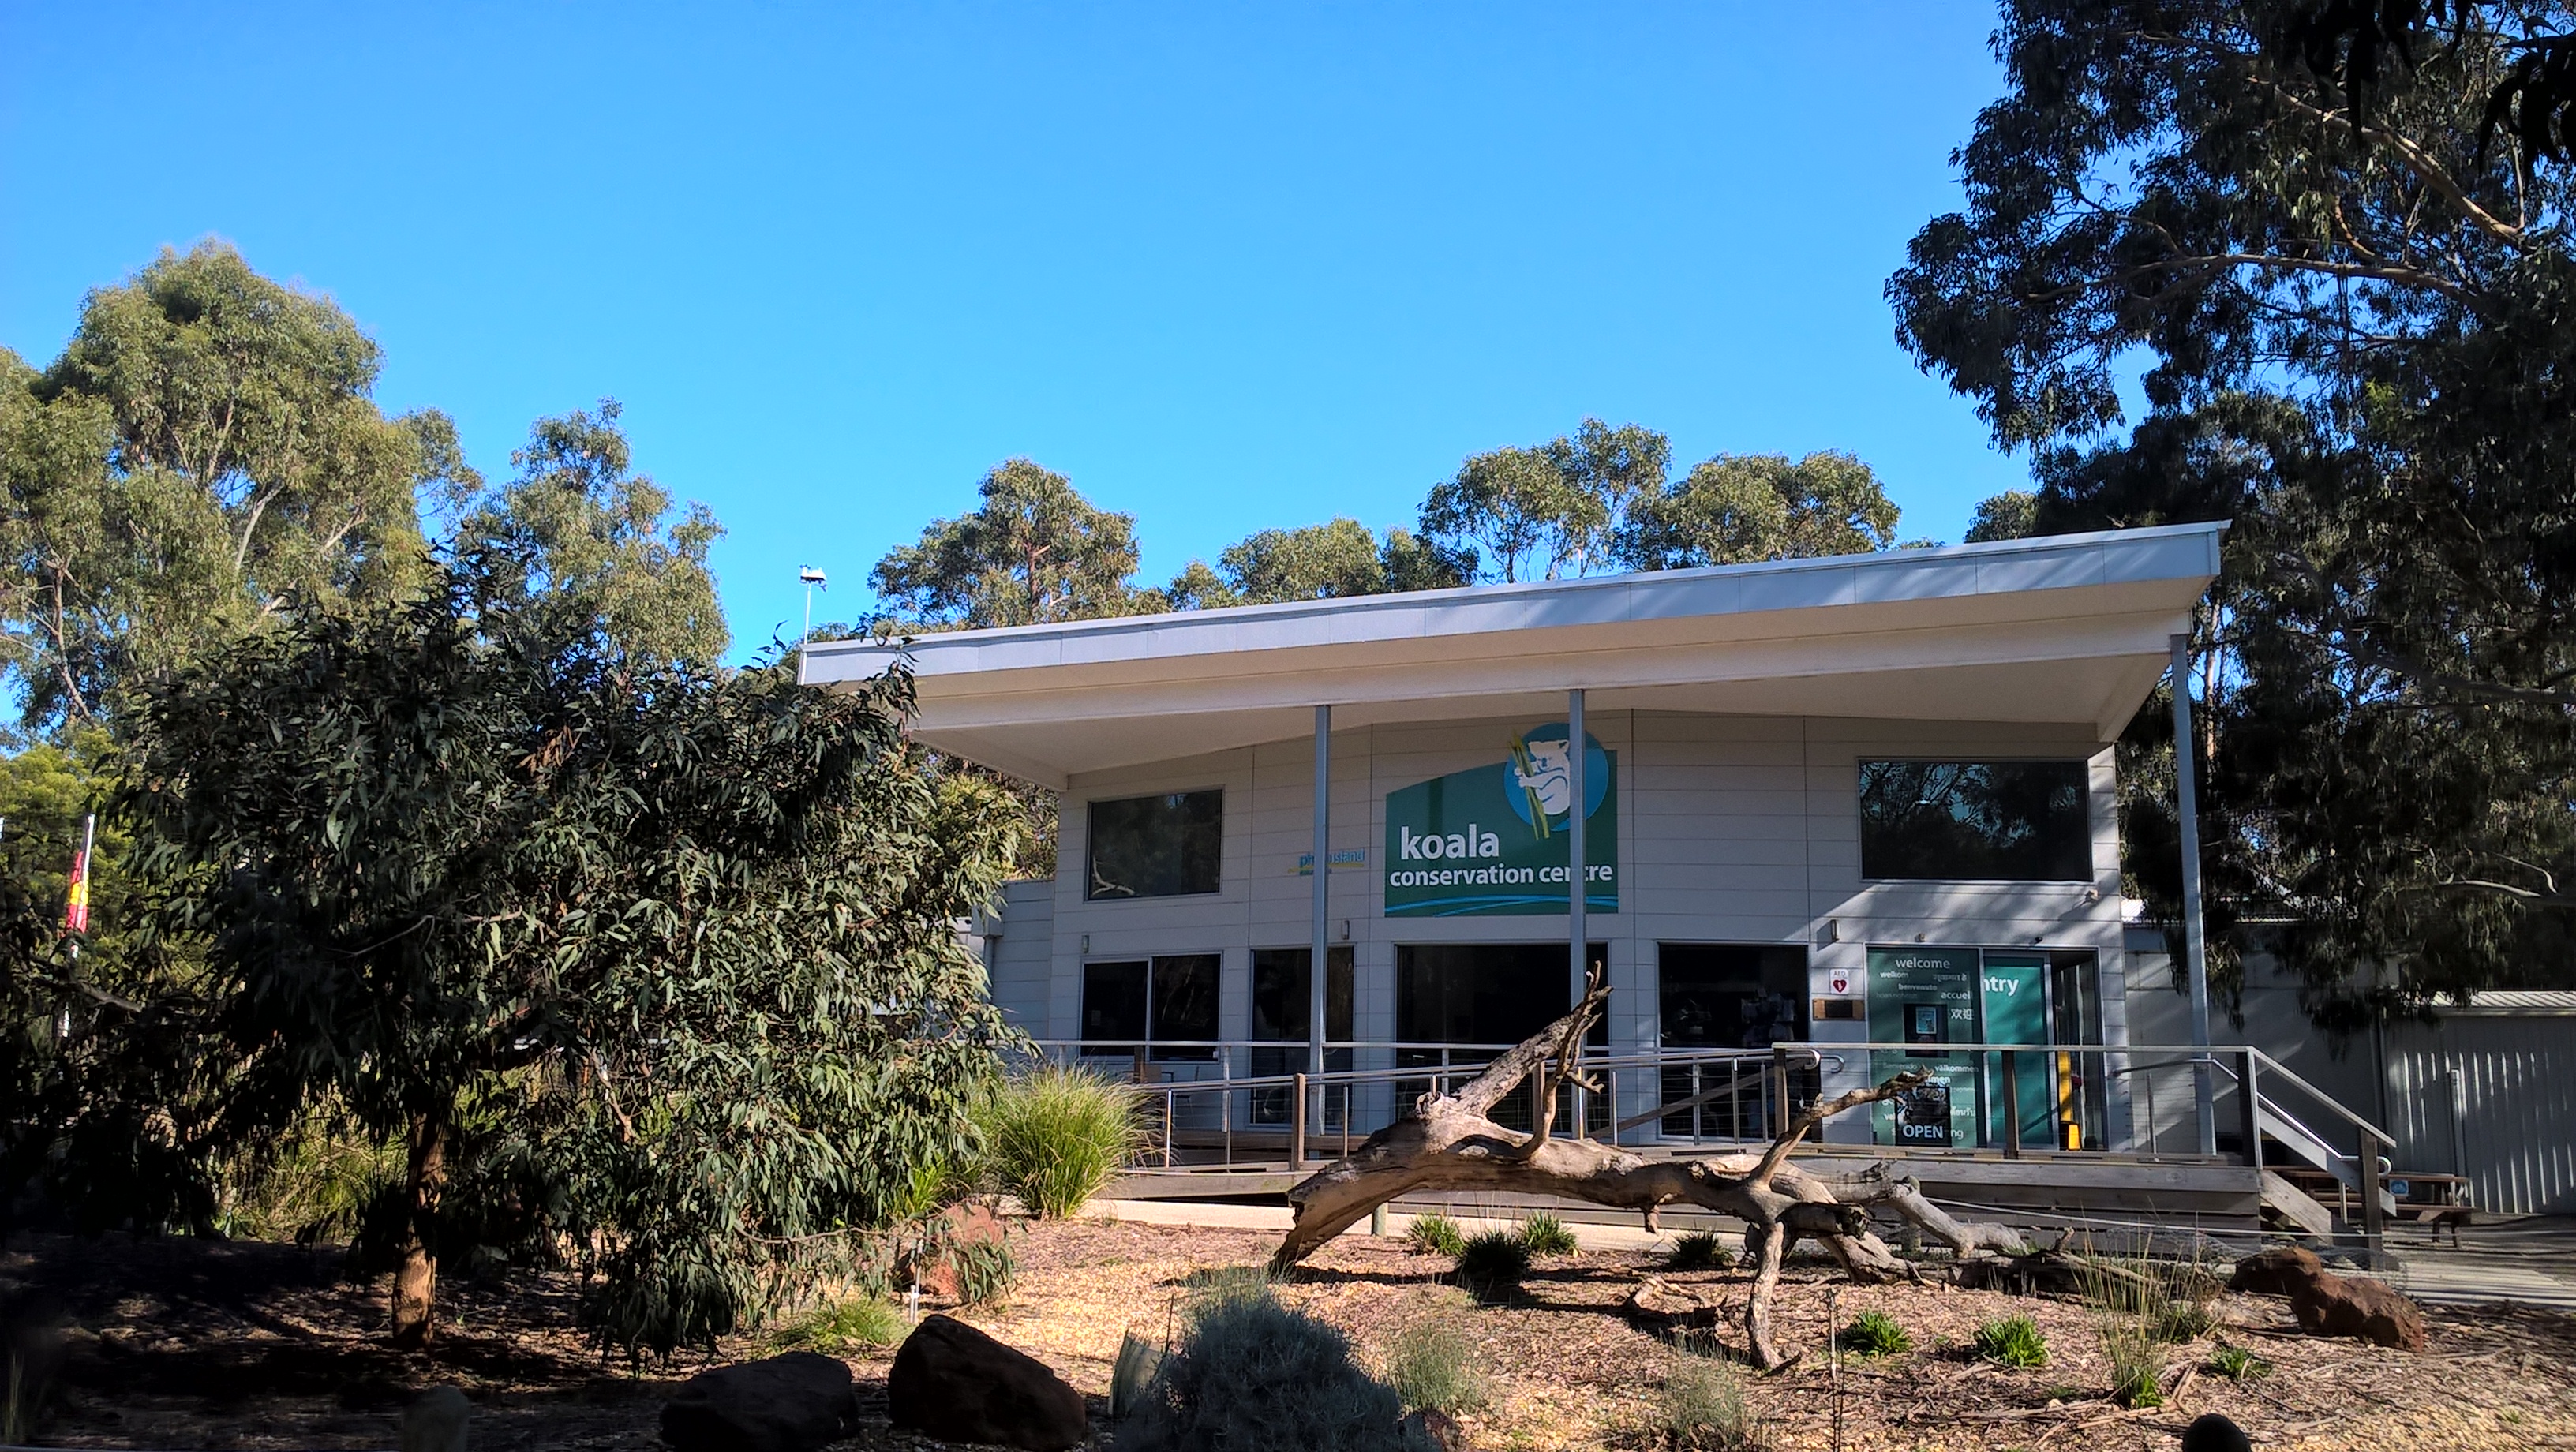 koala conservation centre phillip island ingresso